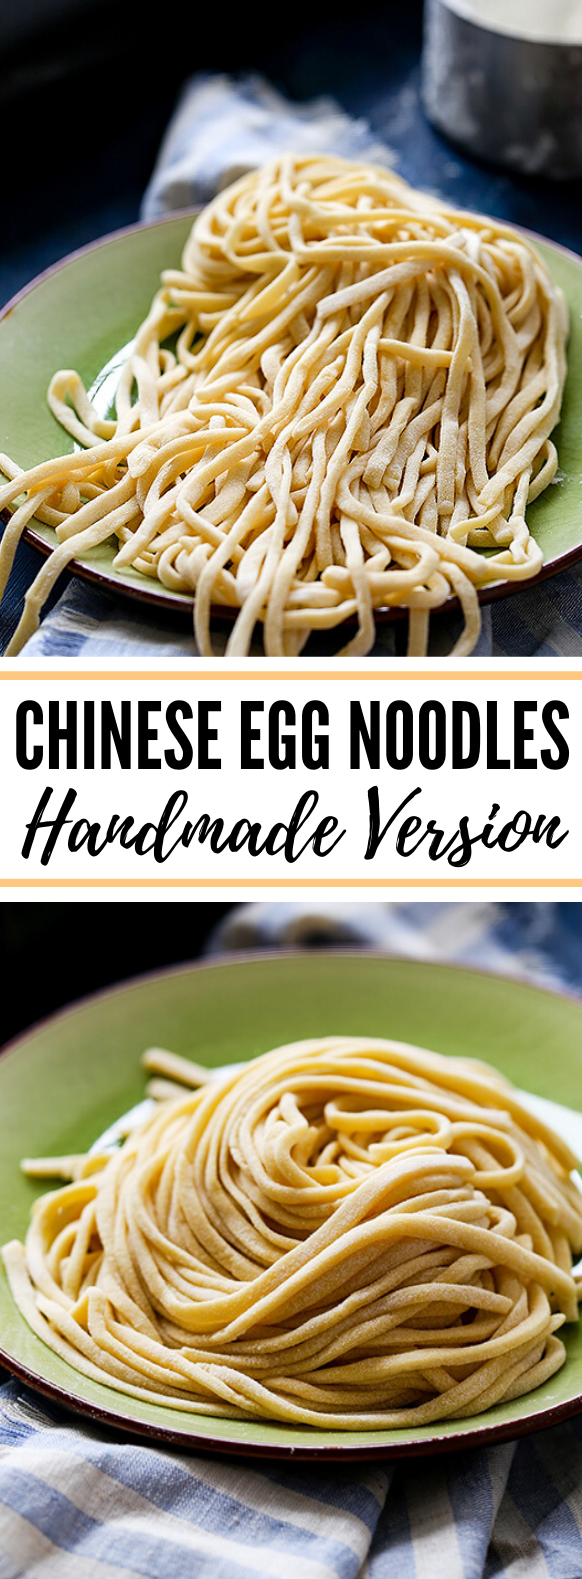 Chinese Egg Noodles- Handmade Version #dinner #meals